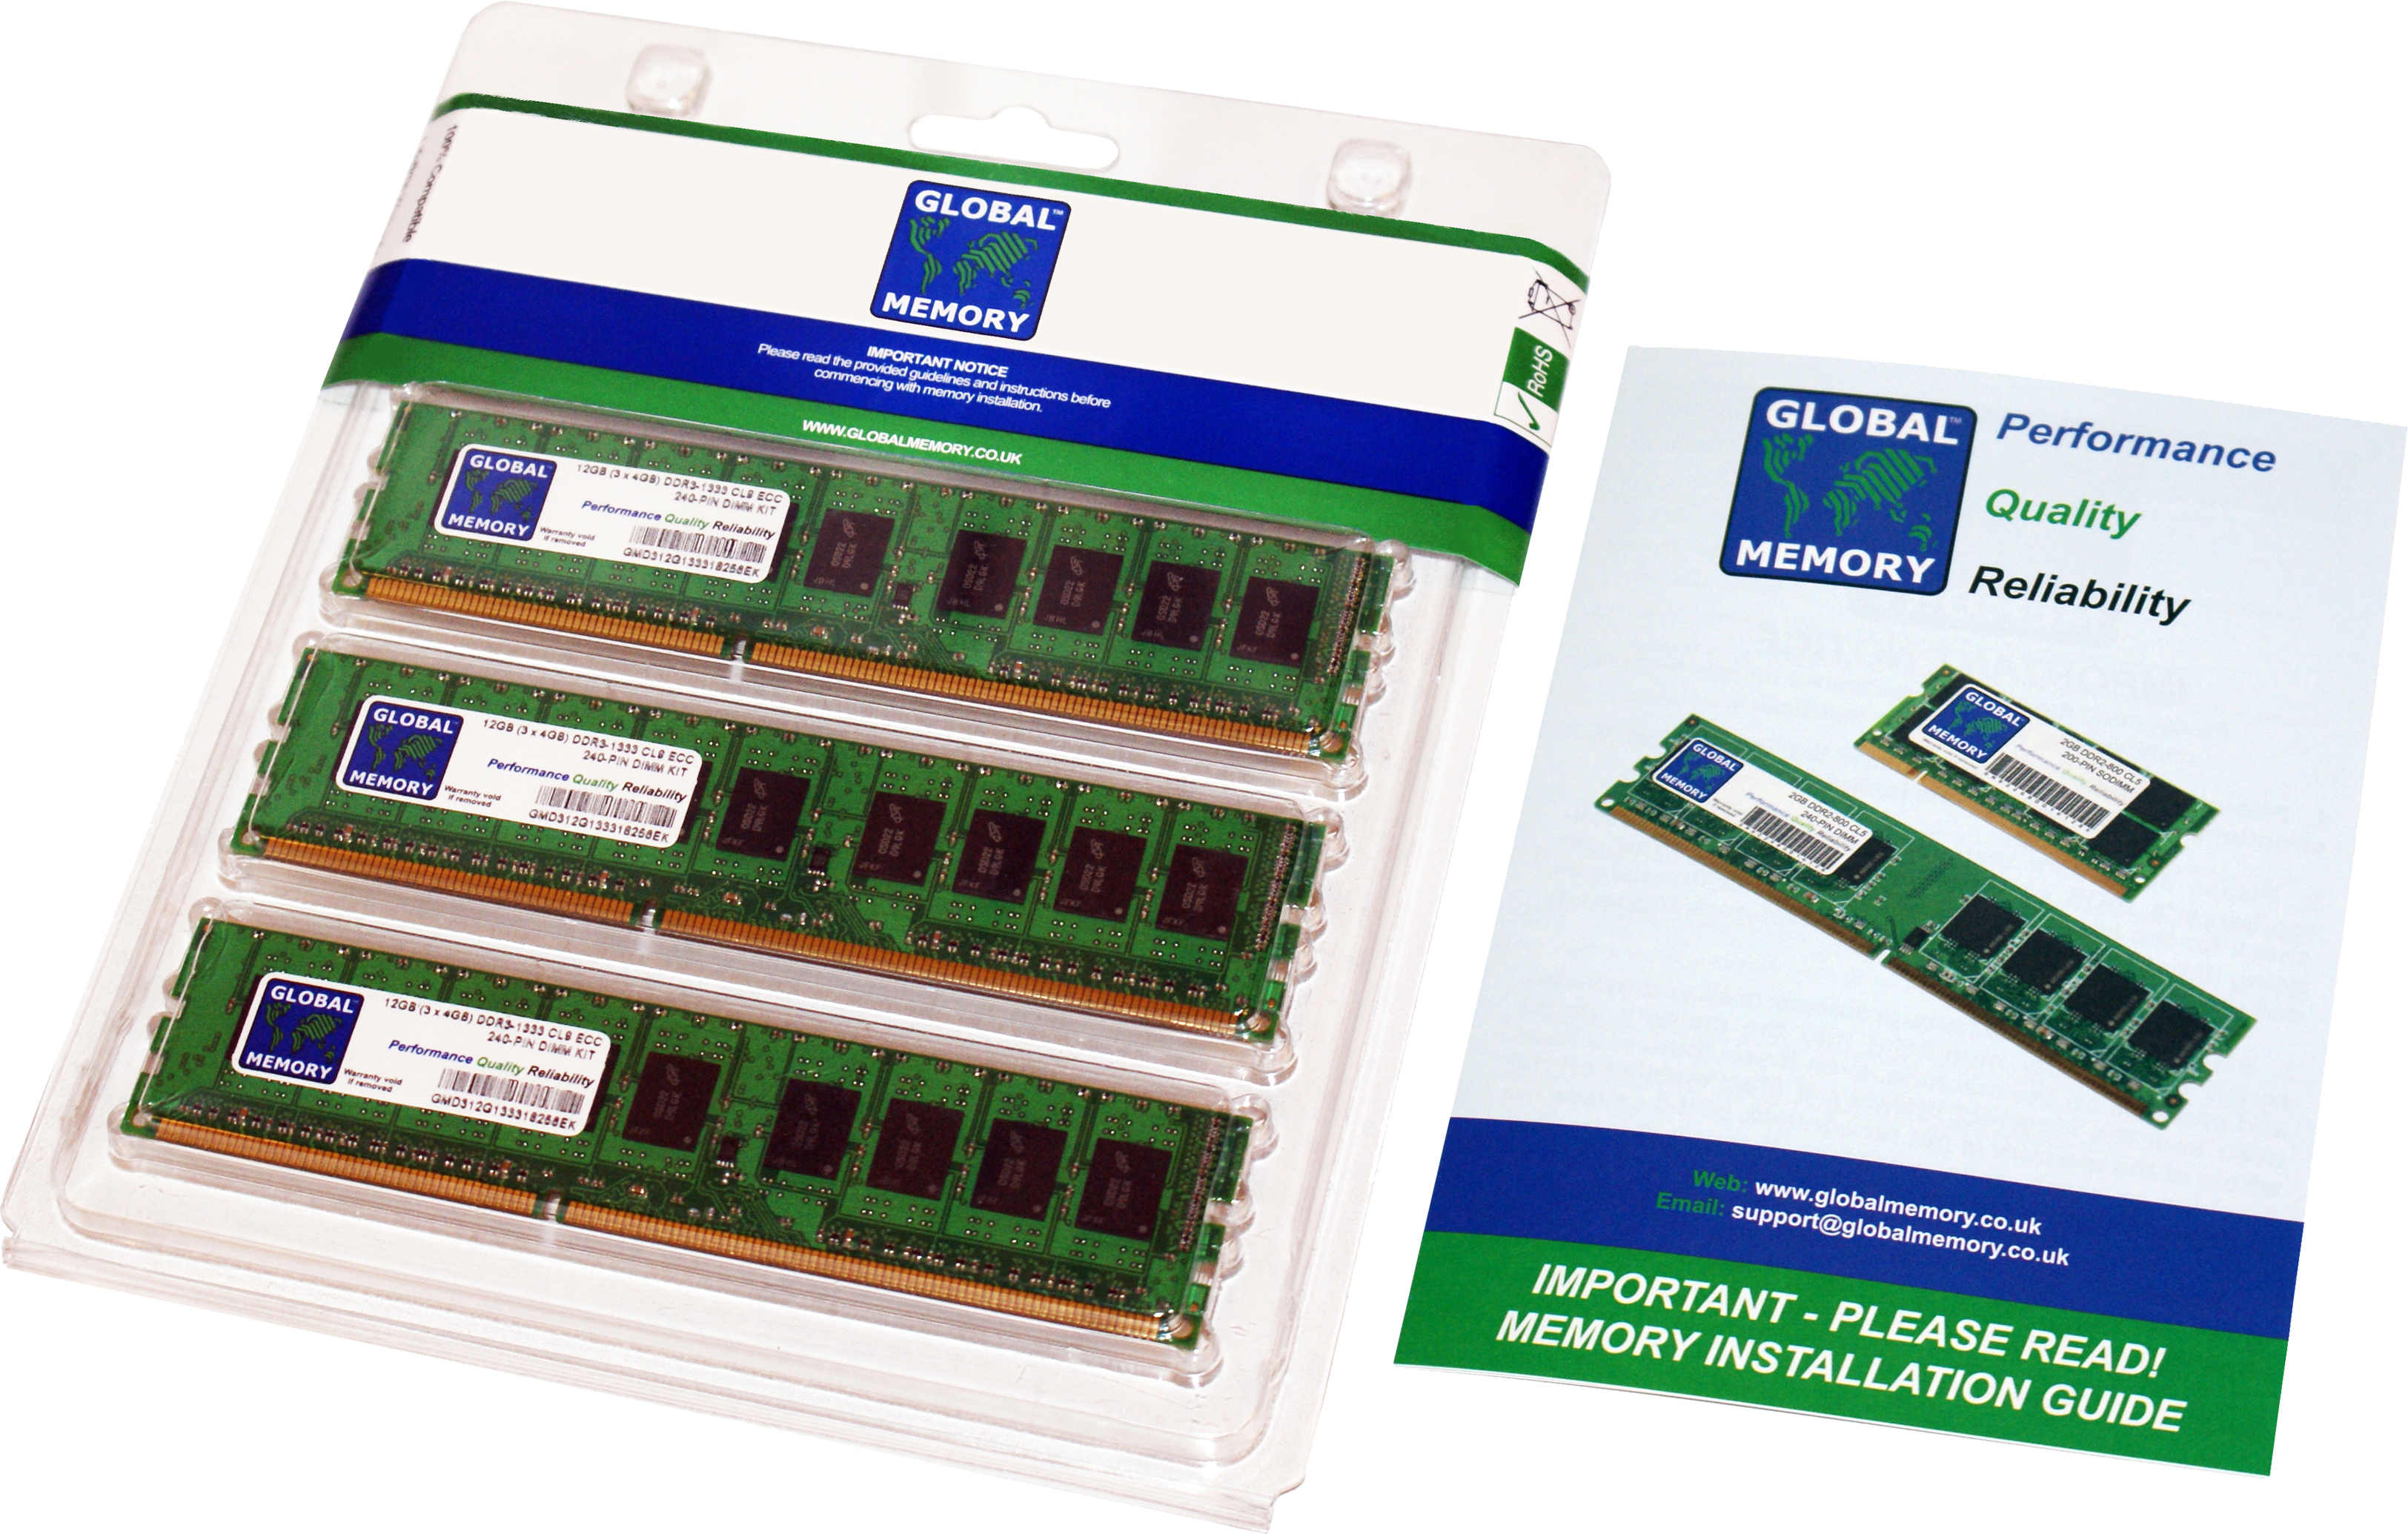 24GB (3 x 8GB) DDR3 1866MHz PC3-14900 240-PIN ECC DIMM (UDIMM) MEMORY RAM KIT FOR SUN SERVERS/WORKSTATIONS